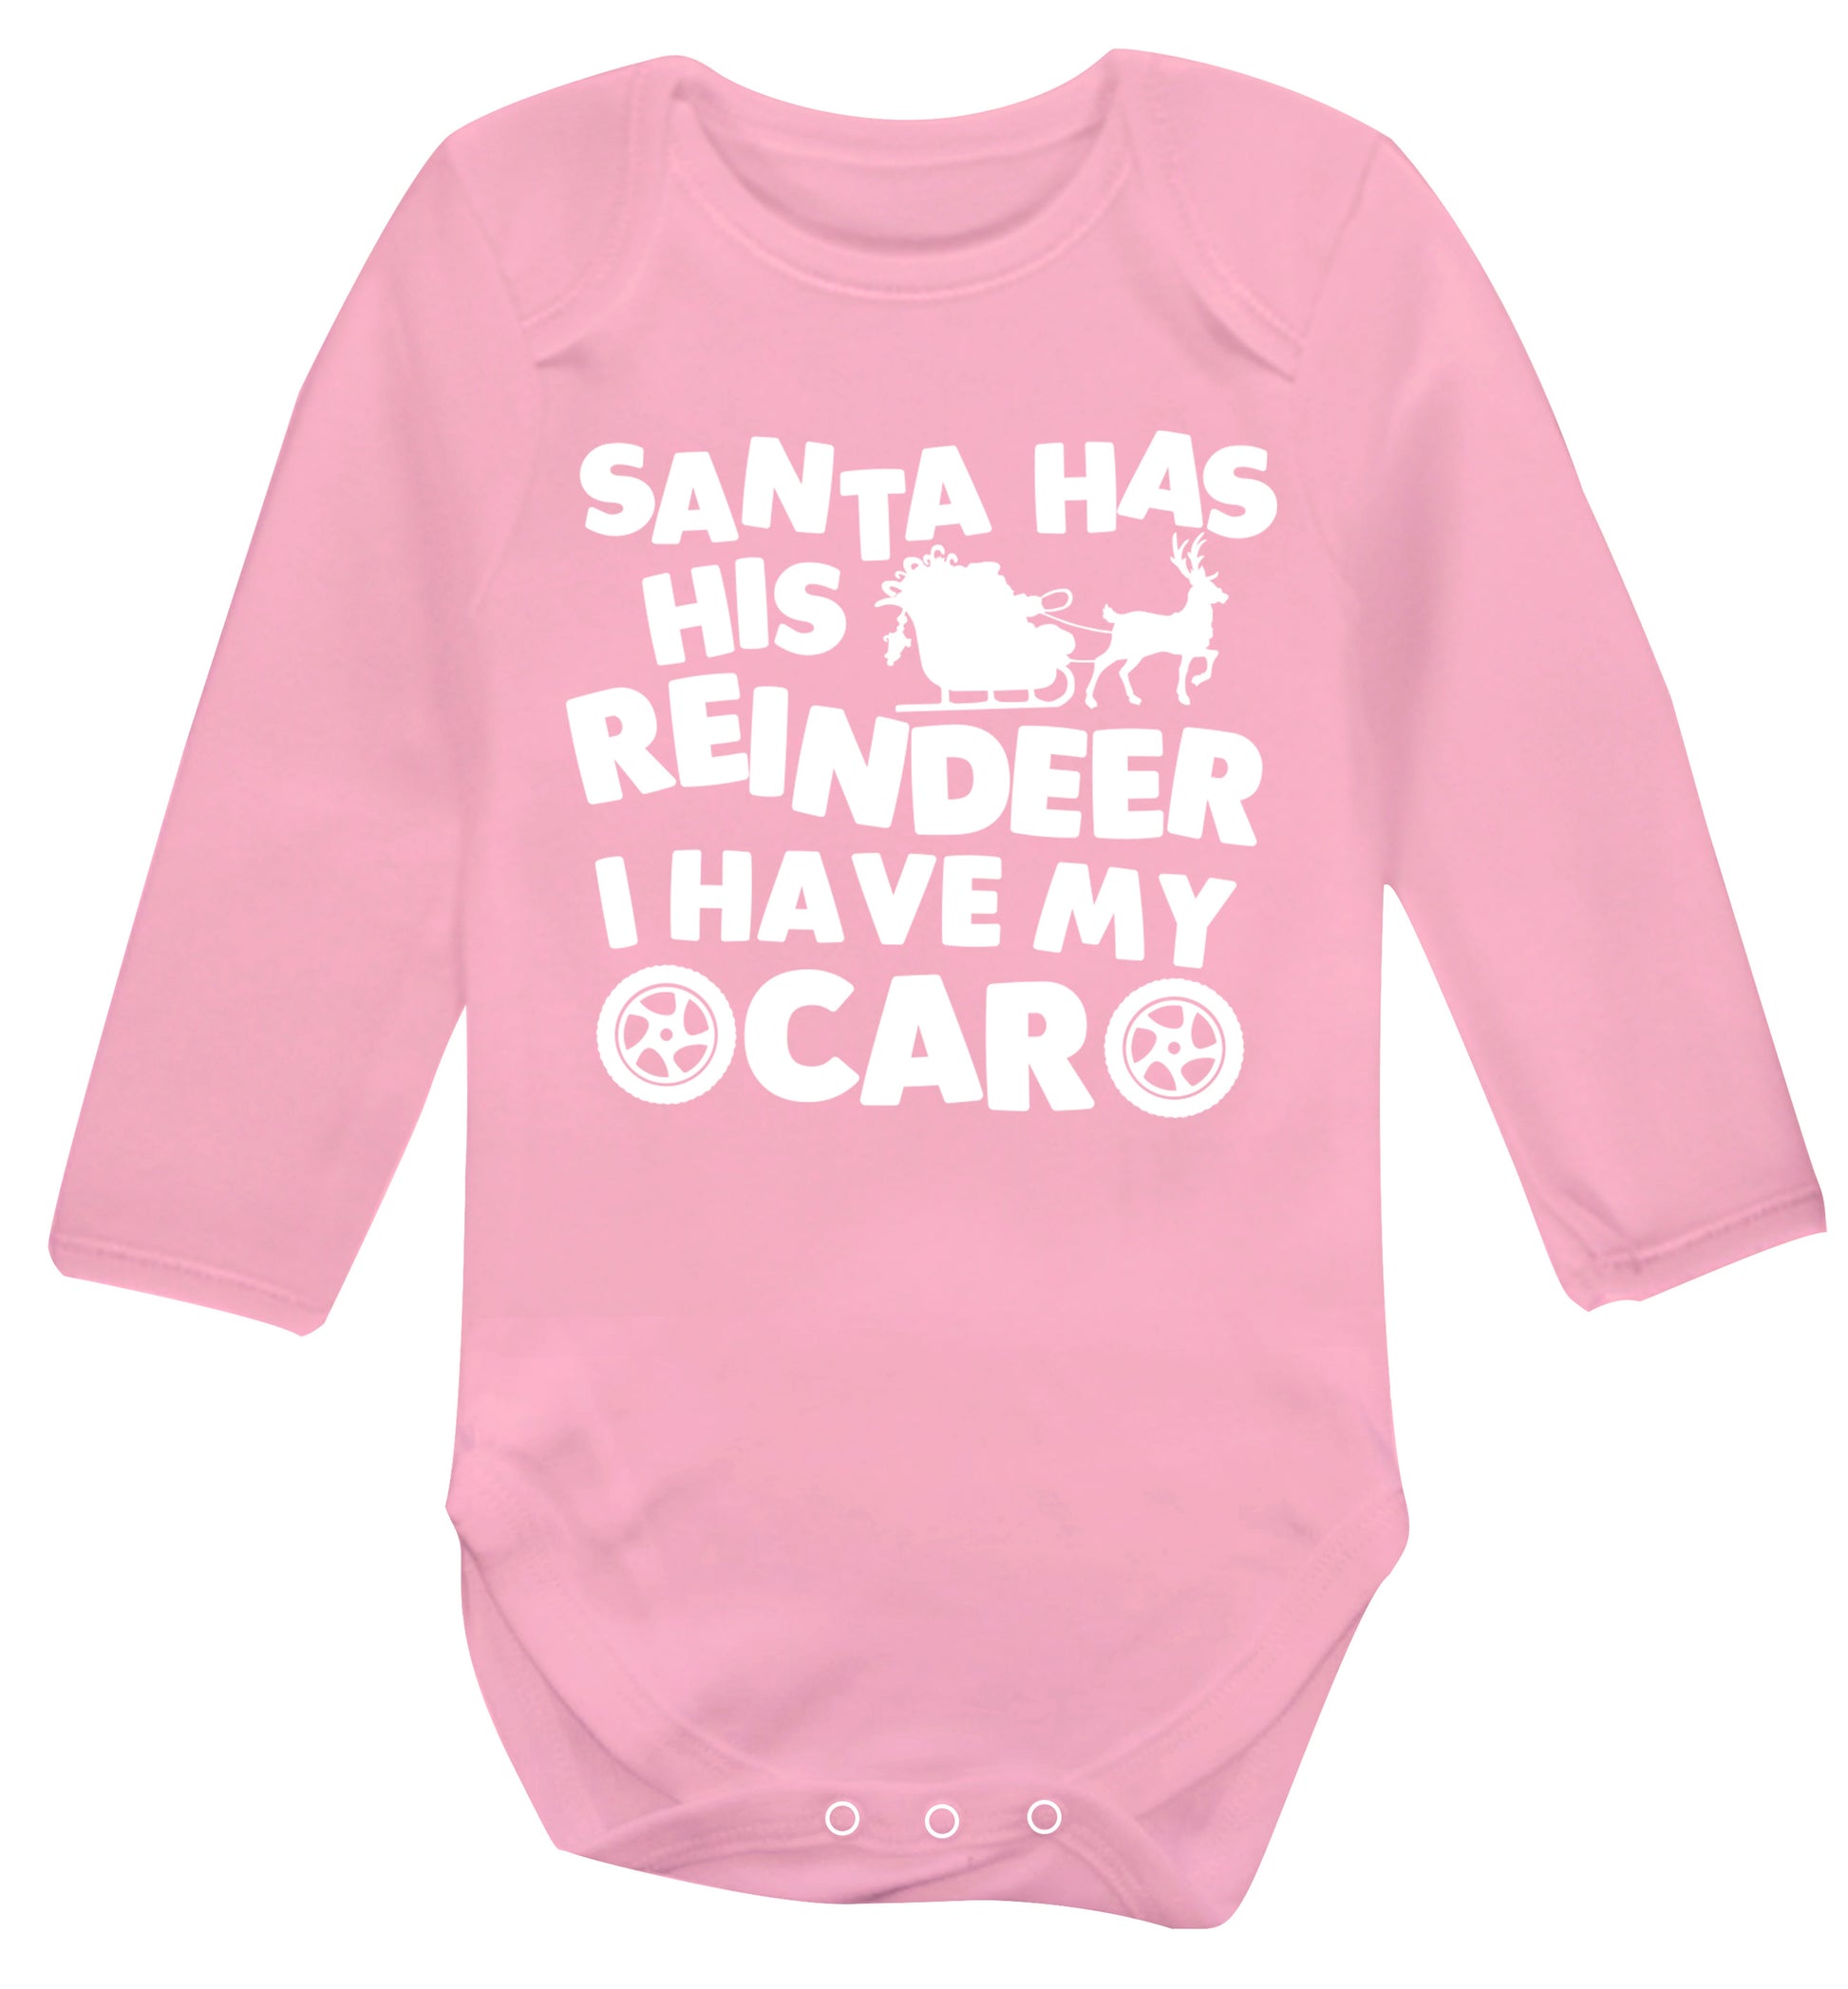 Santa has his reindeer I have my car Baby Vest long sleeved pale pink 6-12 months